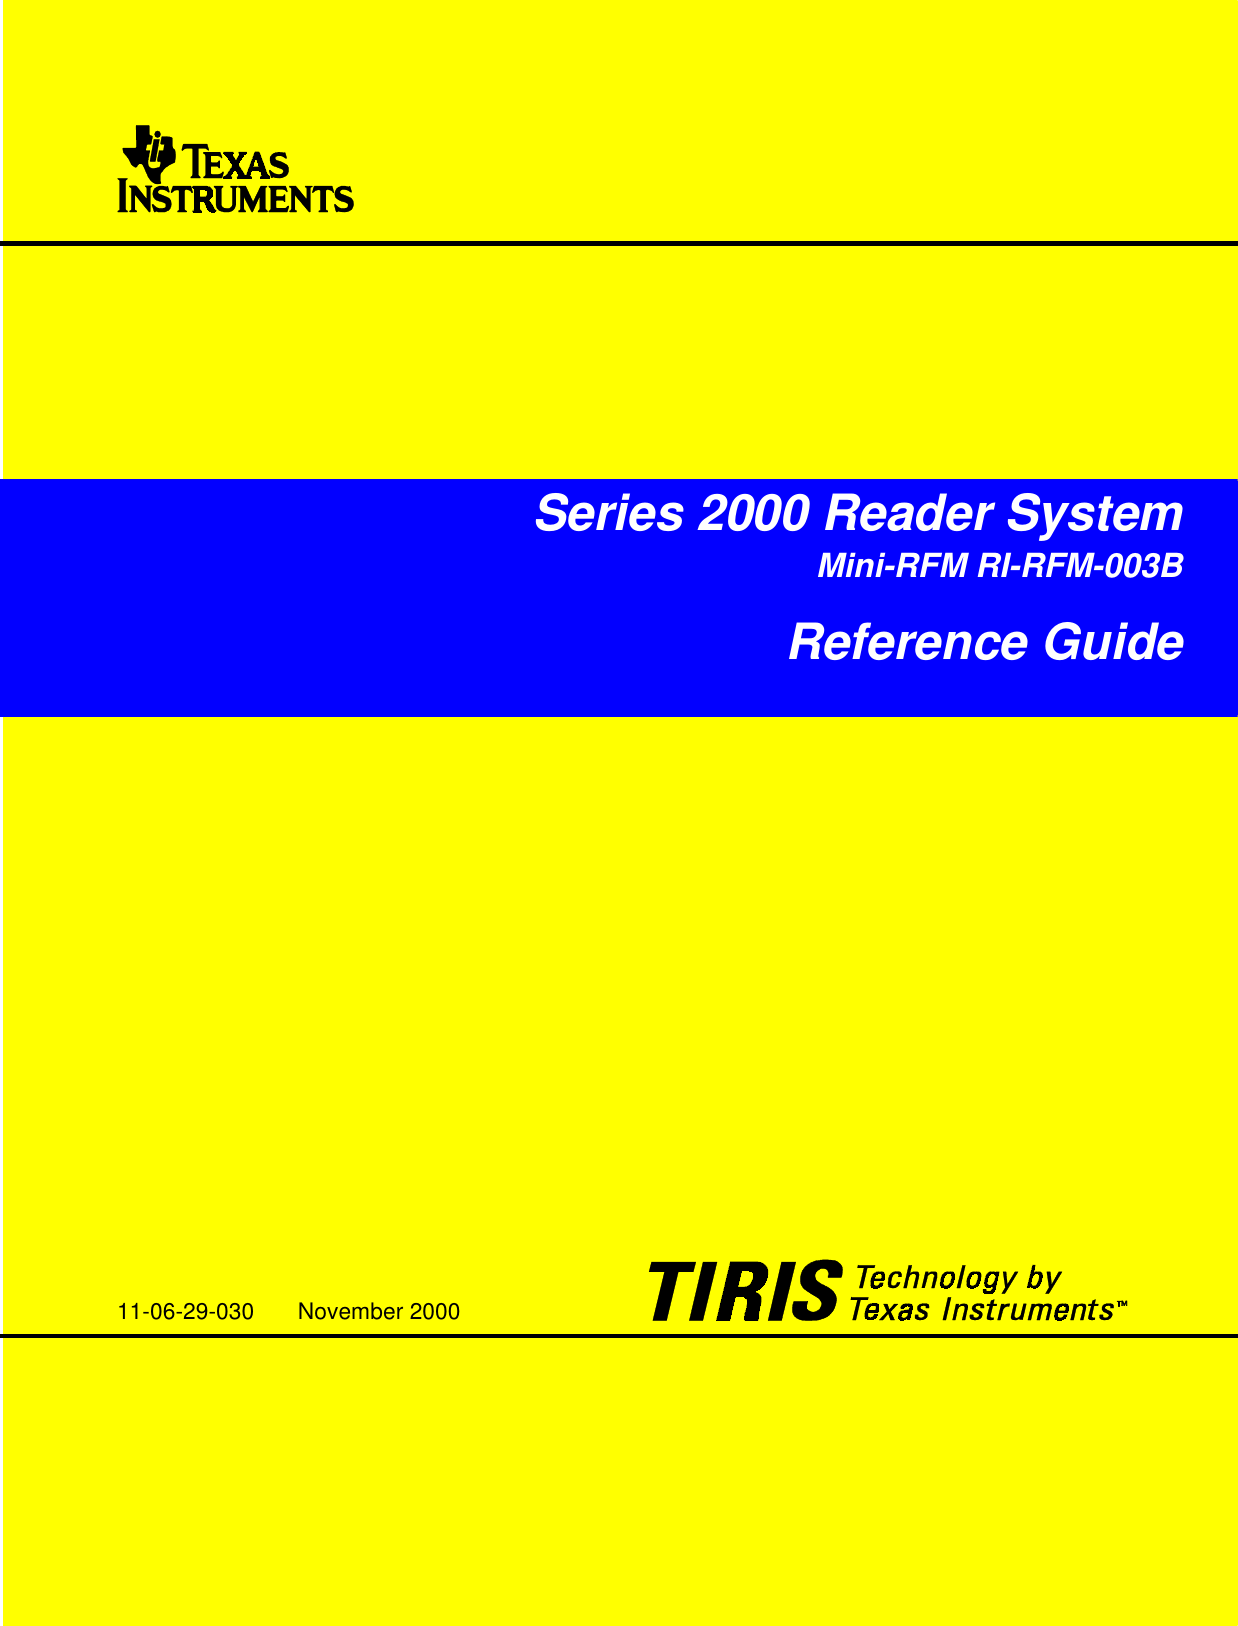 1November ’00 PrefaceSeries 2000 Reader SystemMini-RFM RI-RFM-003BReference Guide11-06-29-030 November 2000